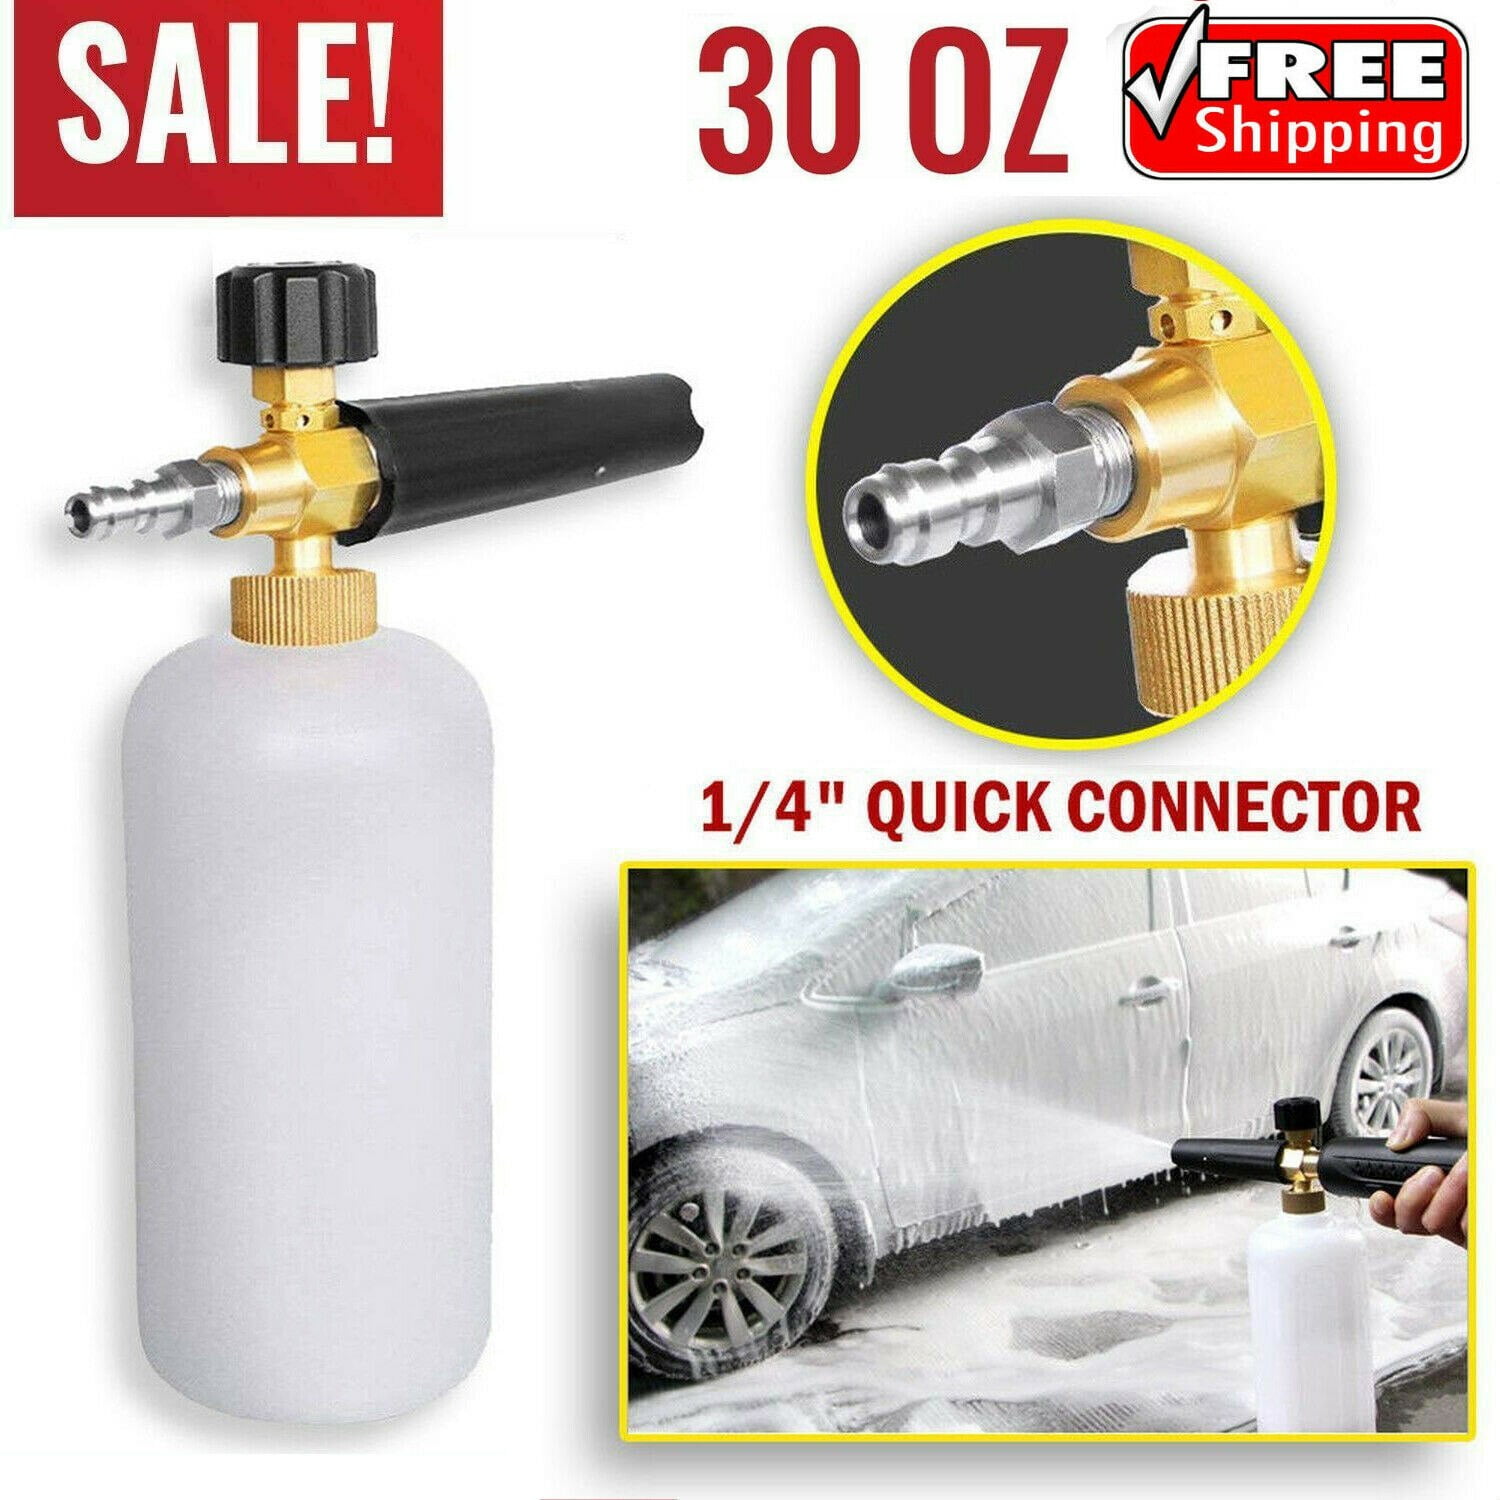 3309 Adjust Car Foamer Wash Bottle Pressure Washer Gun Supplies Tool Water Gun 